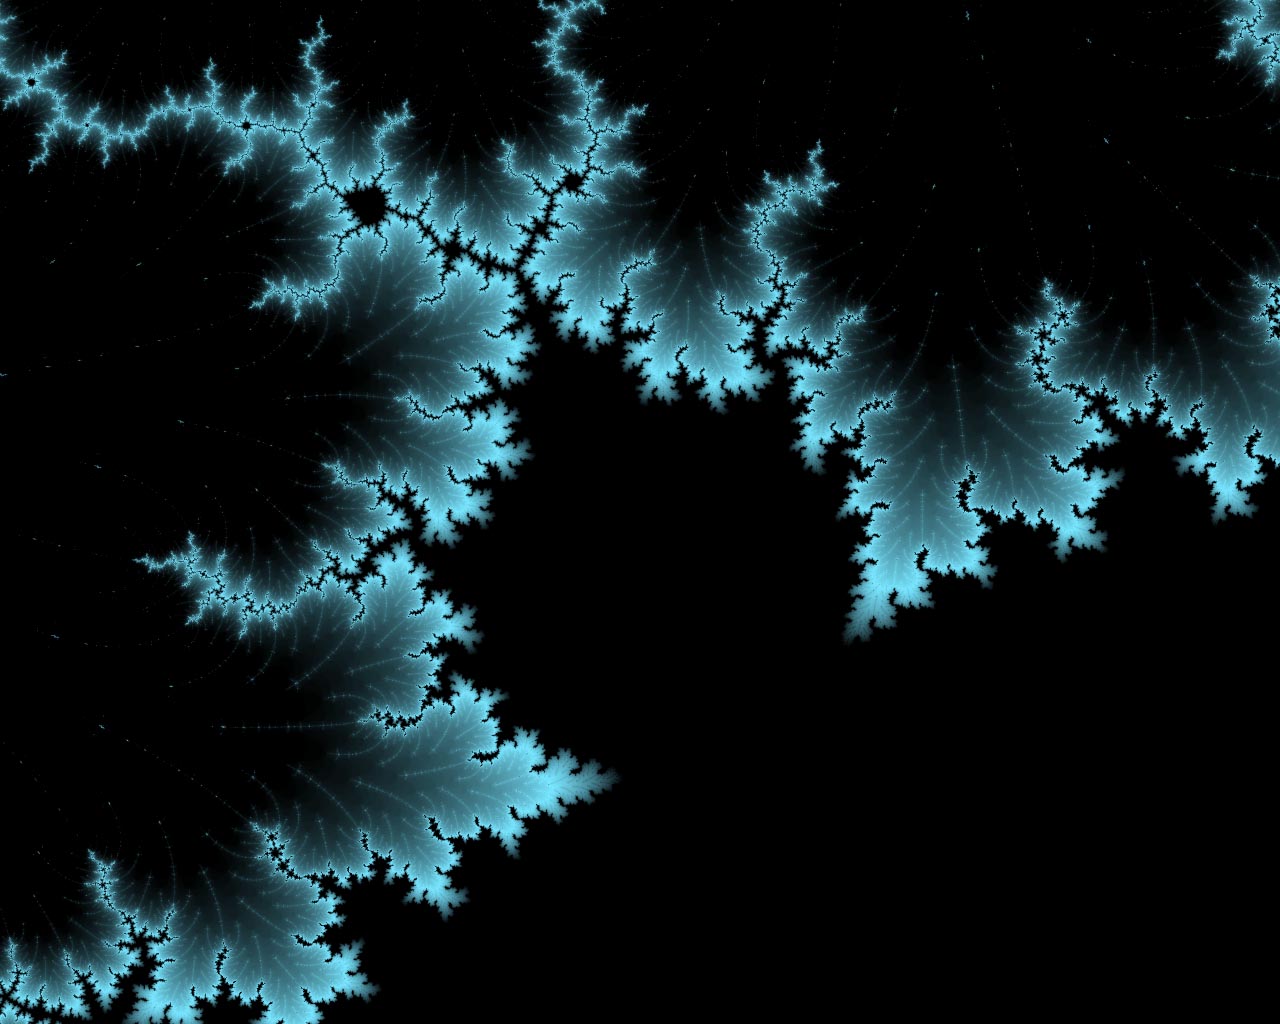 images/gallerie/fractal03.jpg